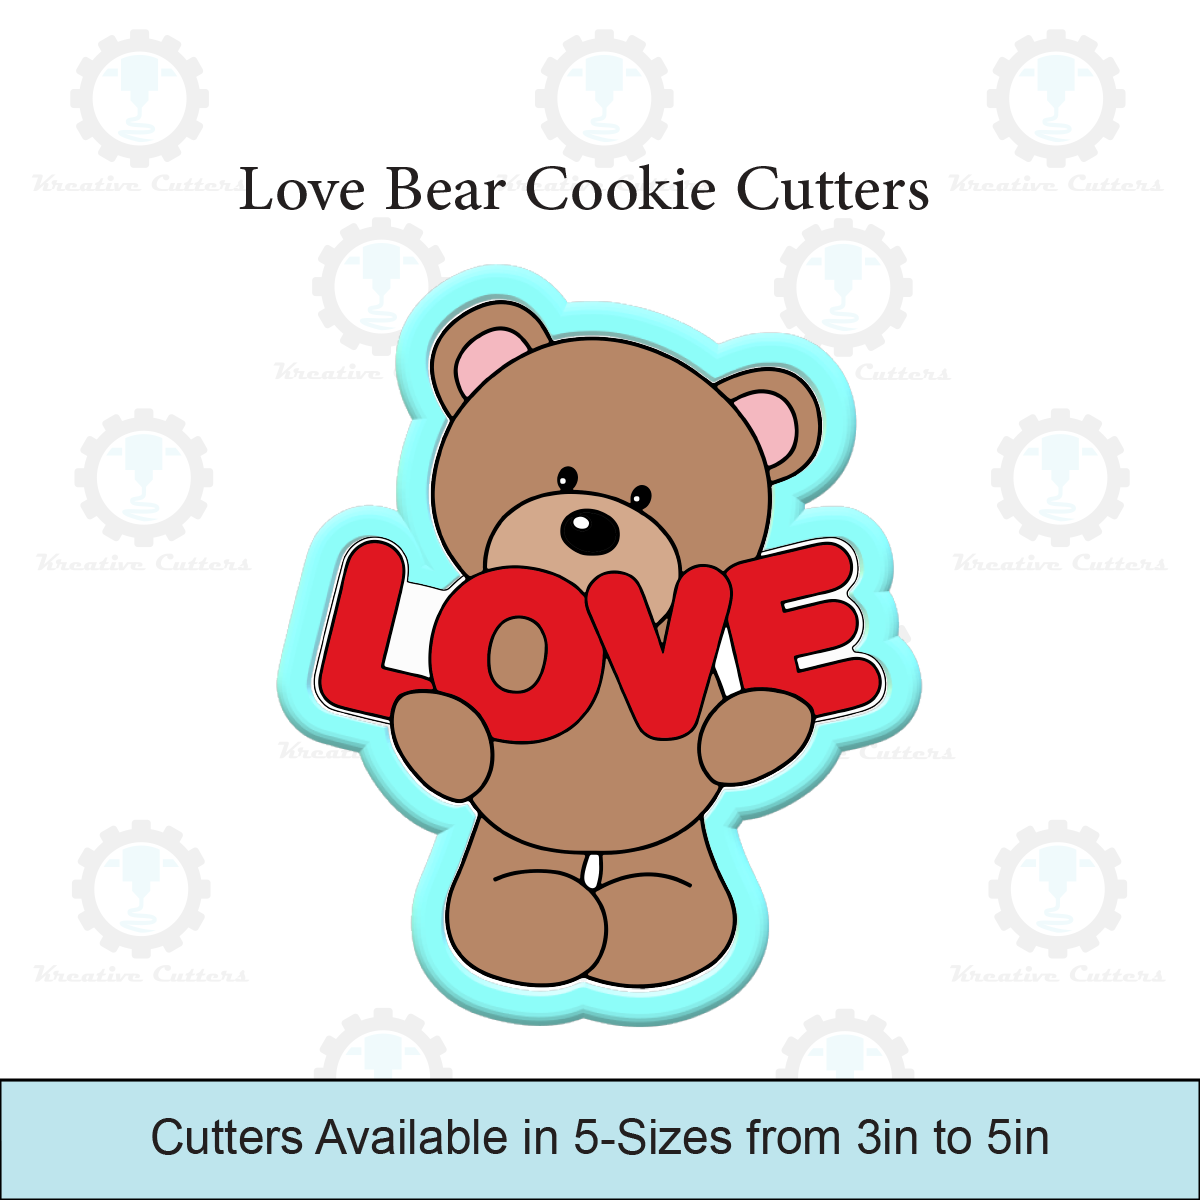 Love Bear Cookie Cutters